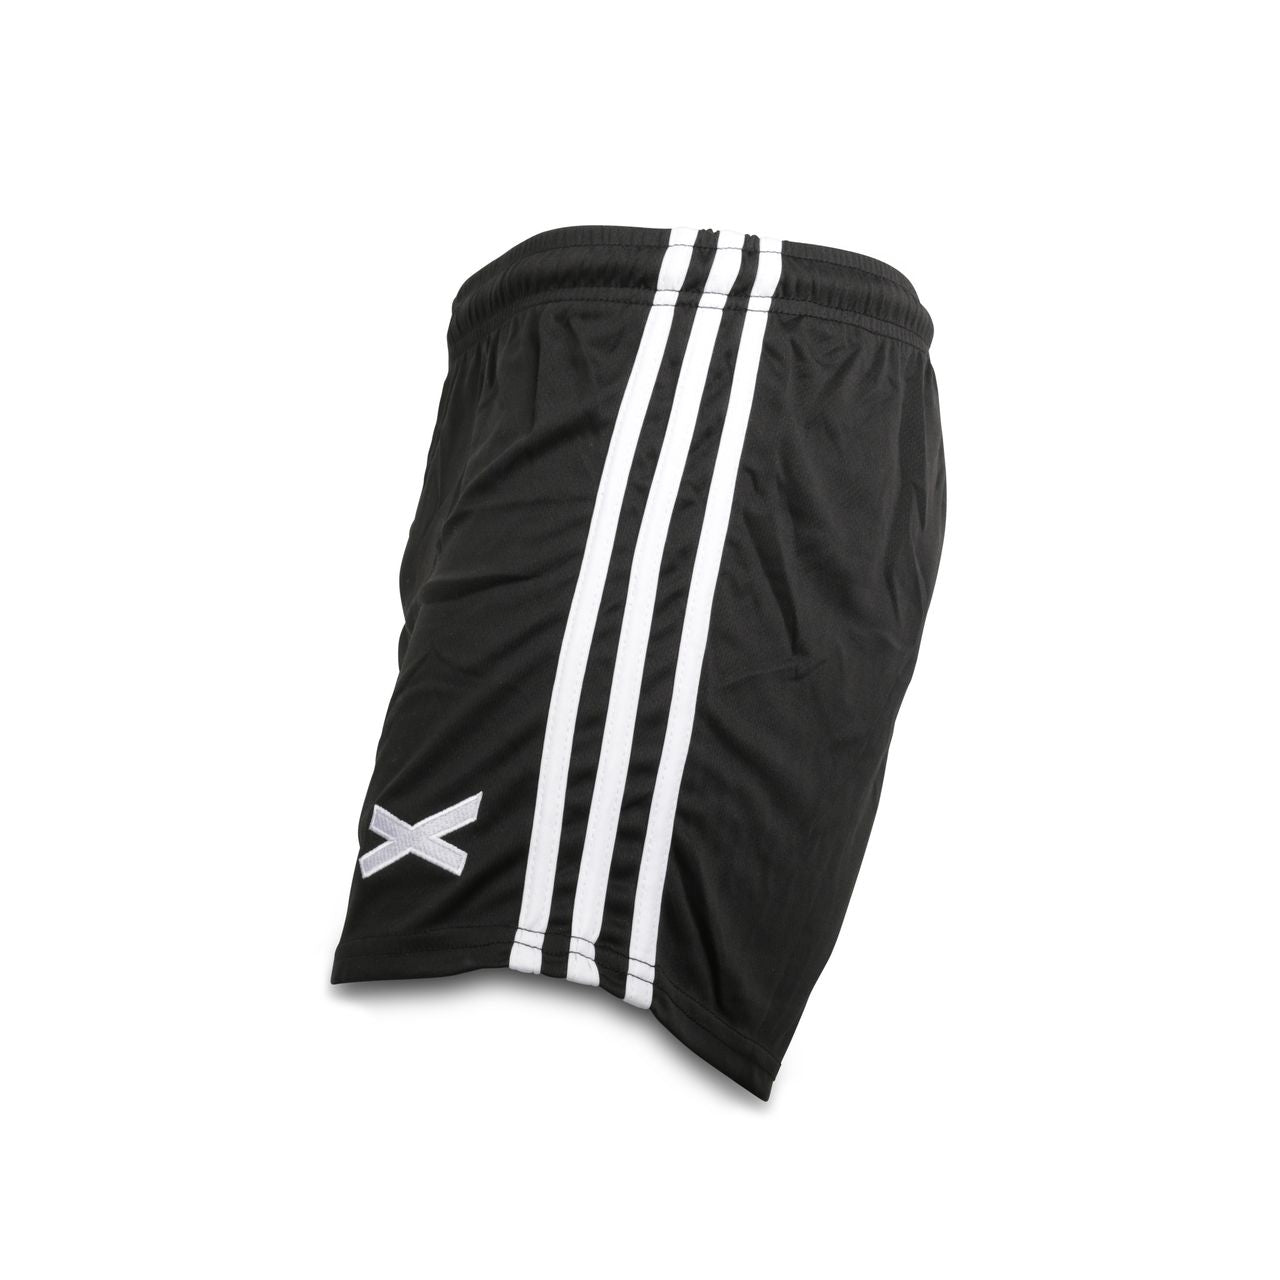 GAA Shorts Black with White Stripes Gaelic Games Sportswear